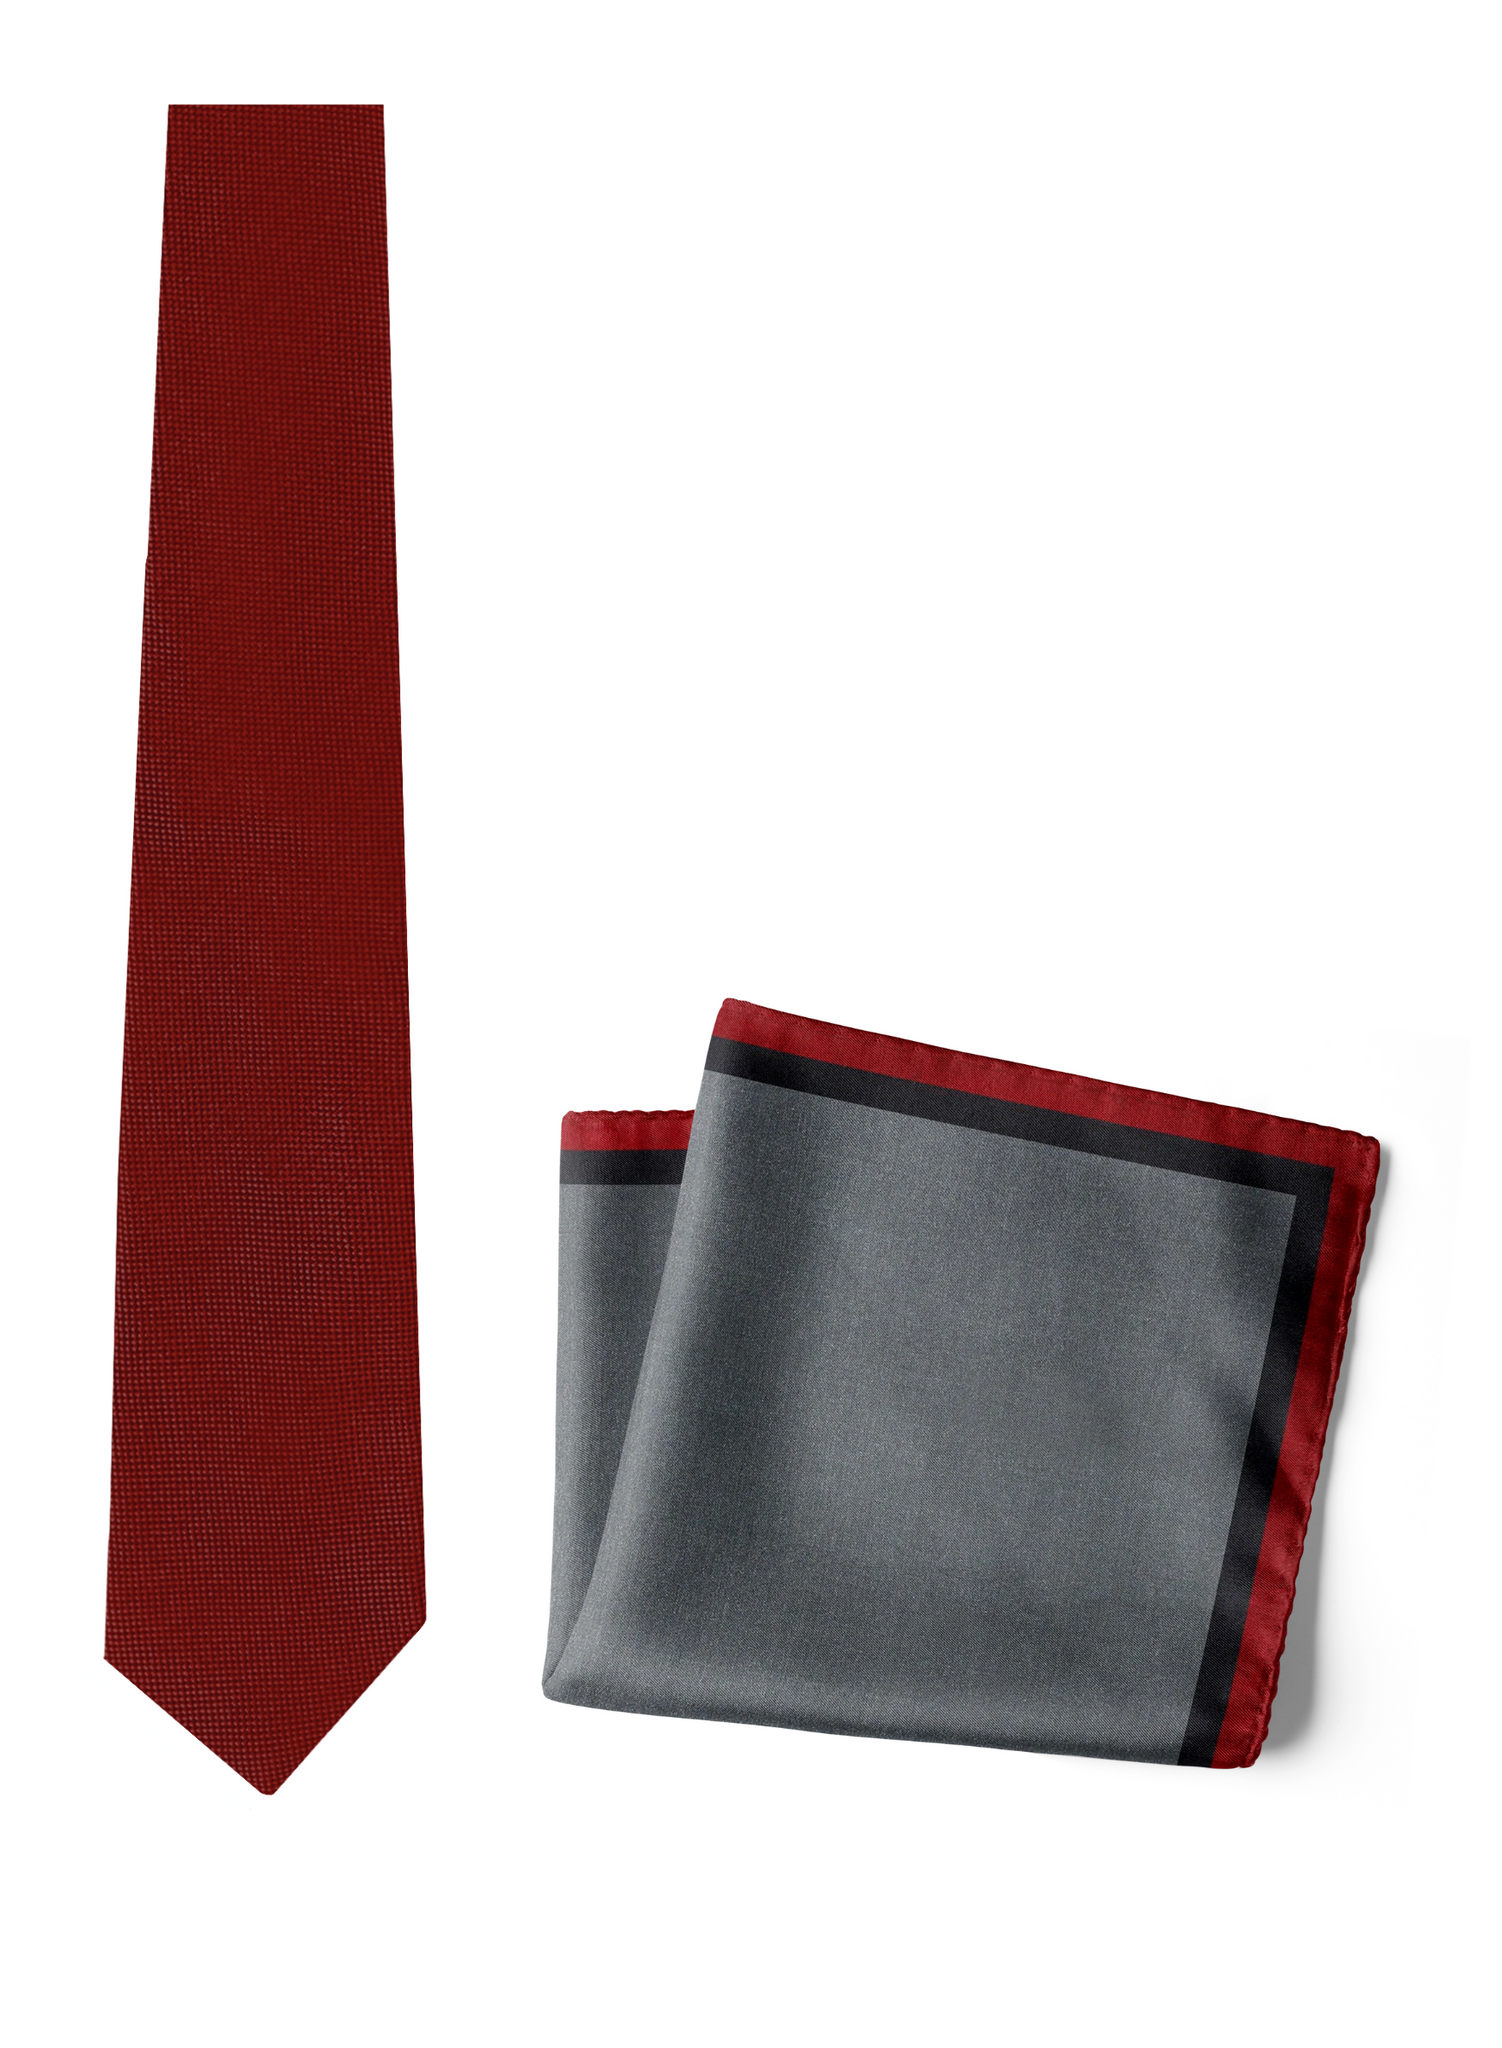 Chokore Pewter - Pocket Square & Chili - Necktie